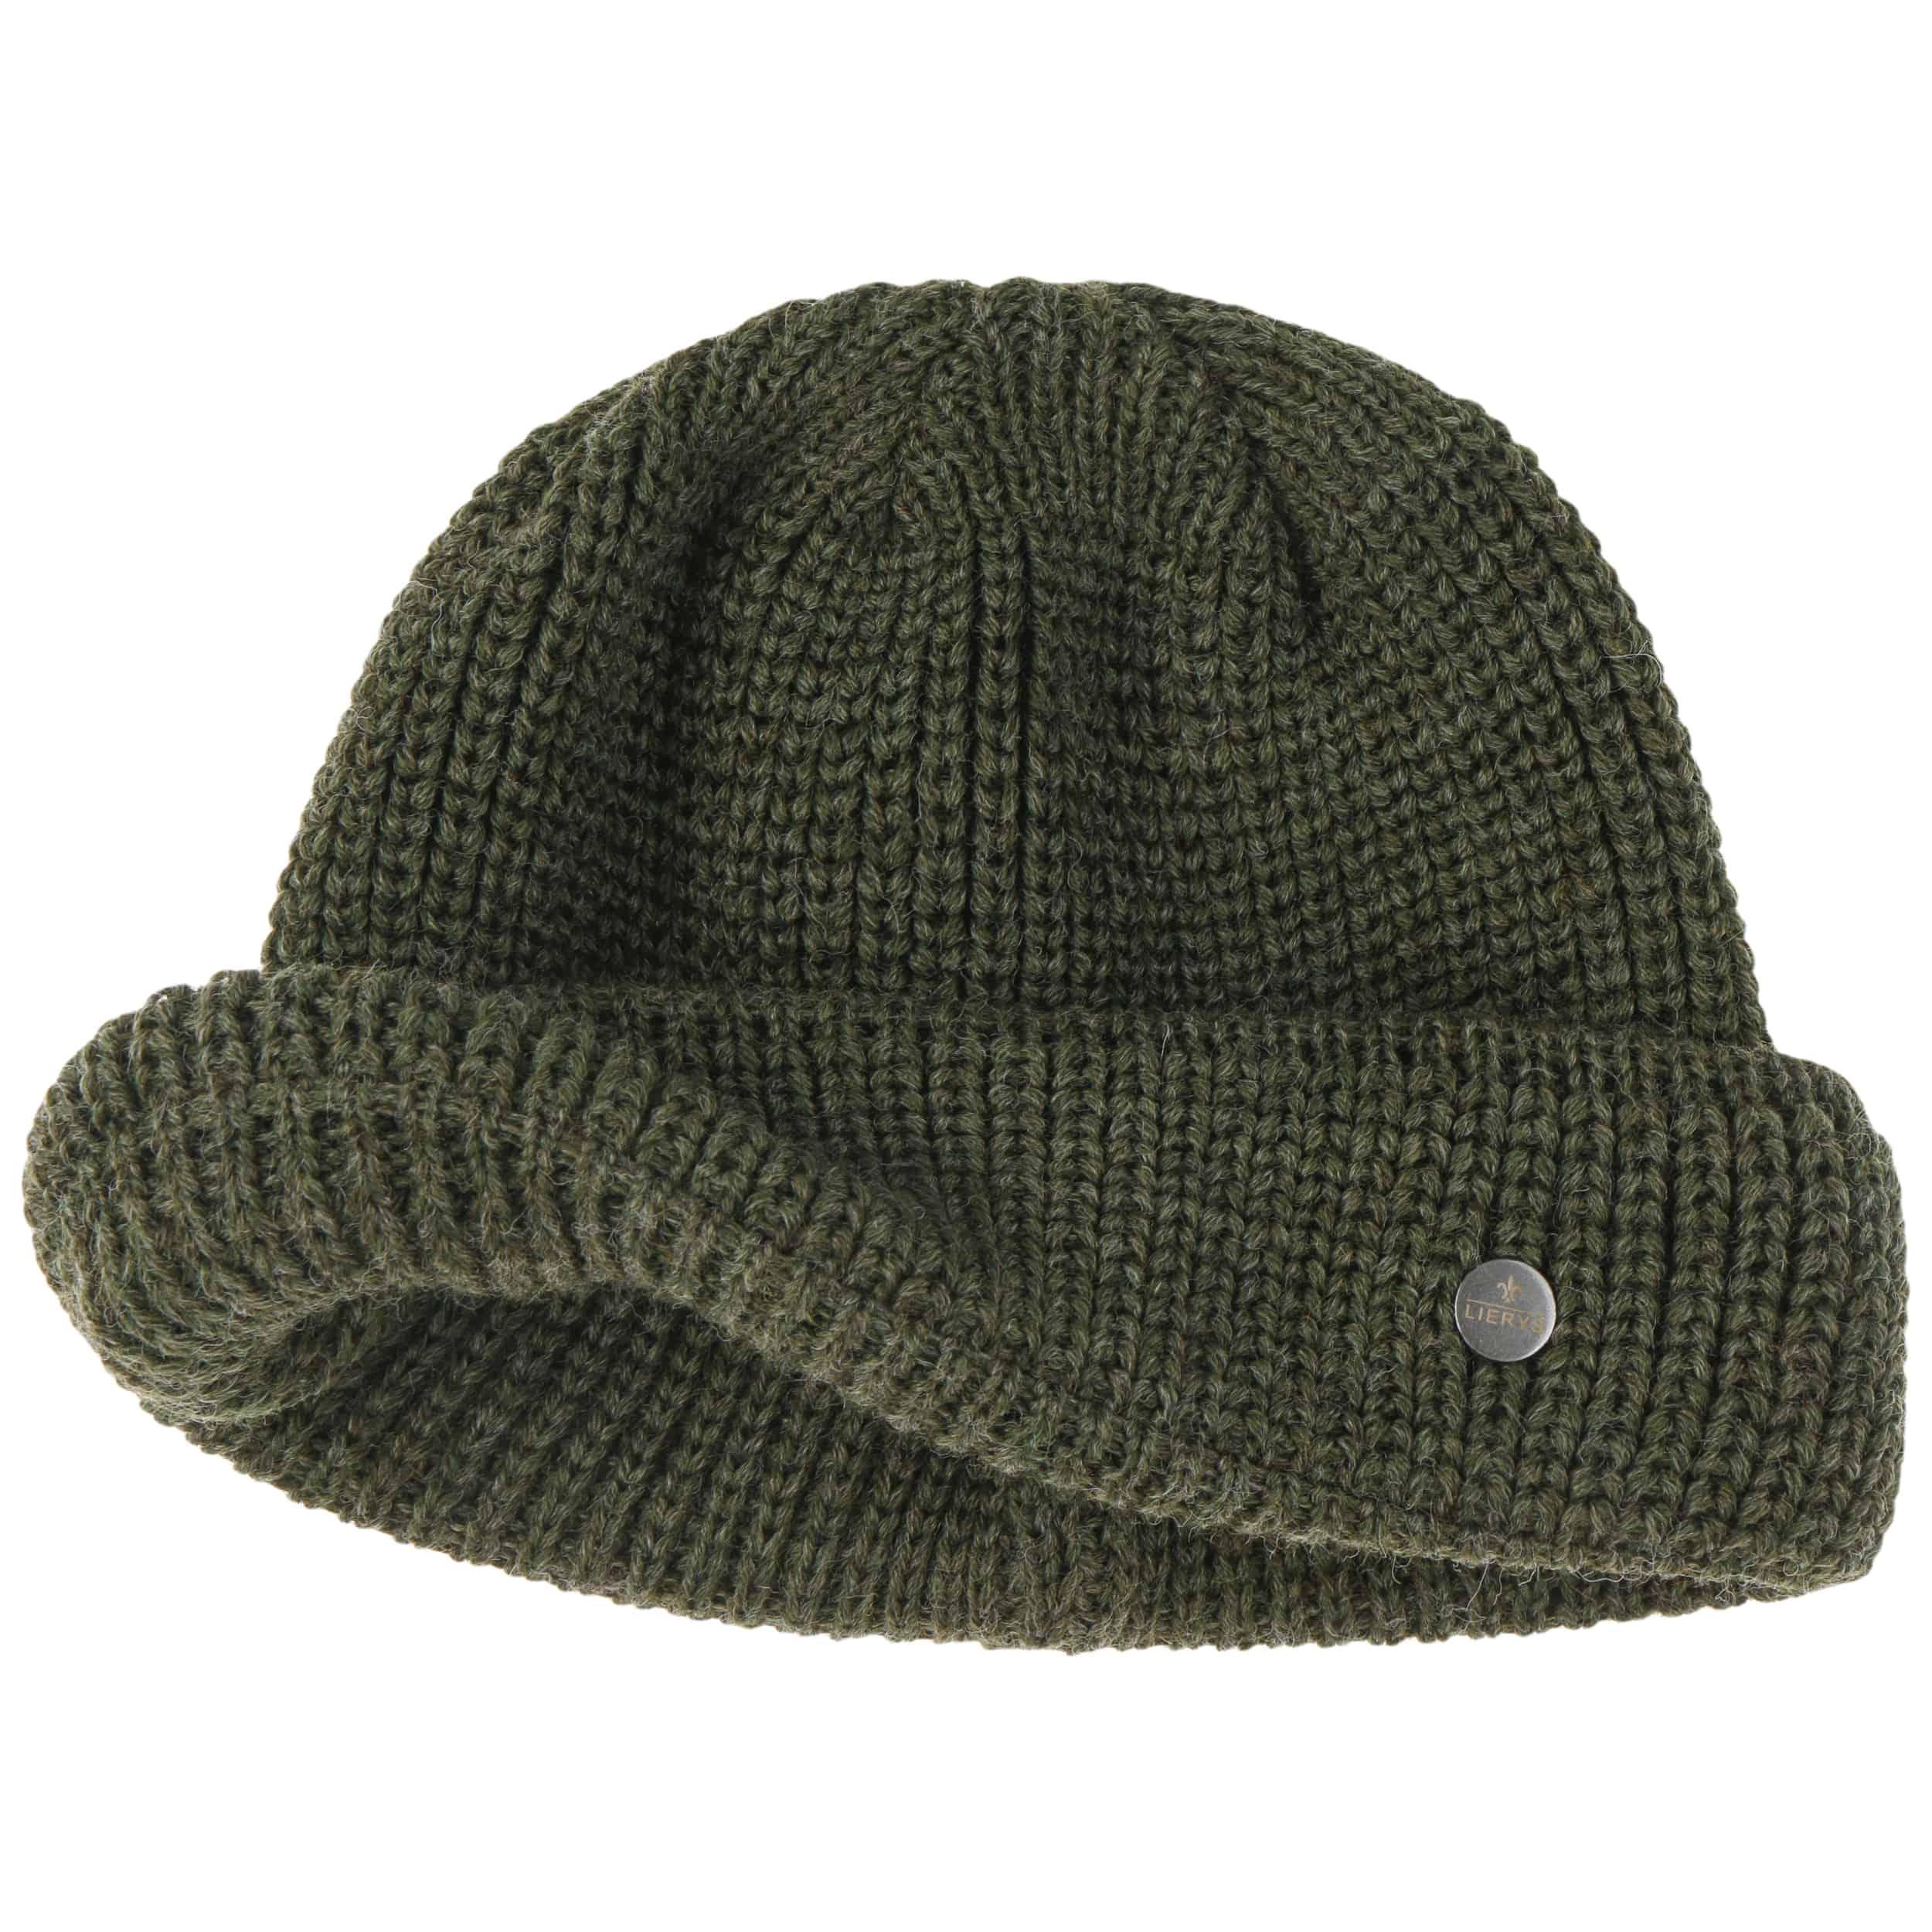 Costa Knit Docker Hat by Lierys - Olive - Female - Size: One Size